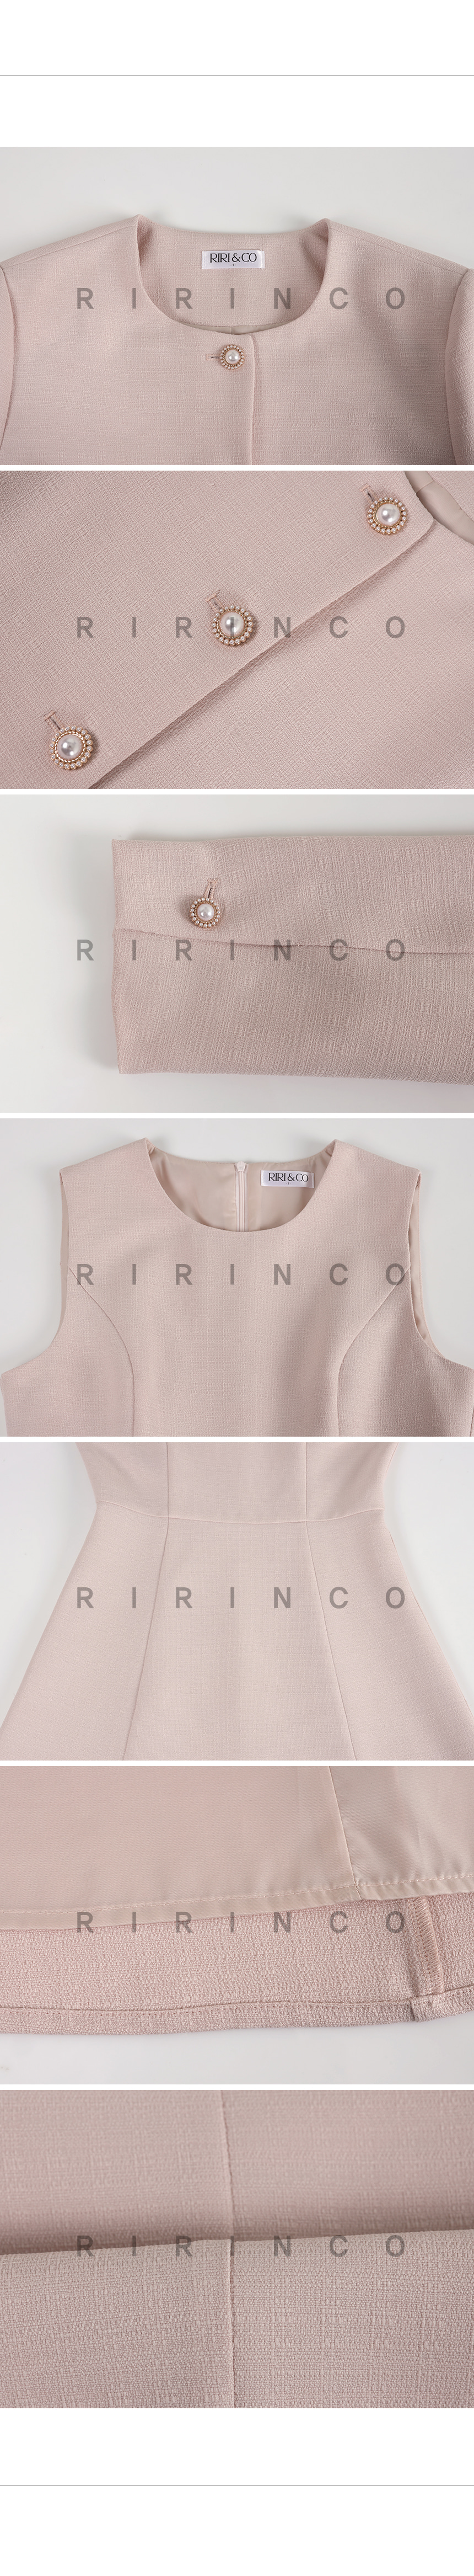 RIRINCO ツイードジャケット&ノースリーブワンピースセット